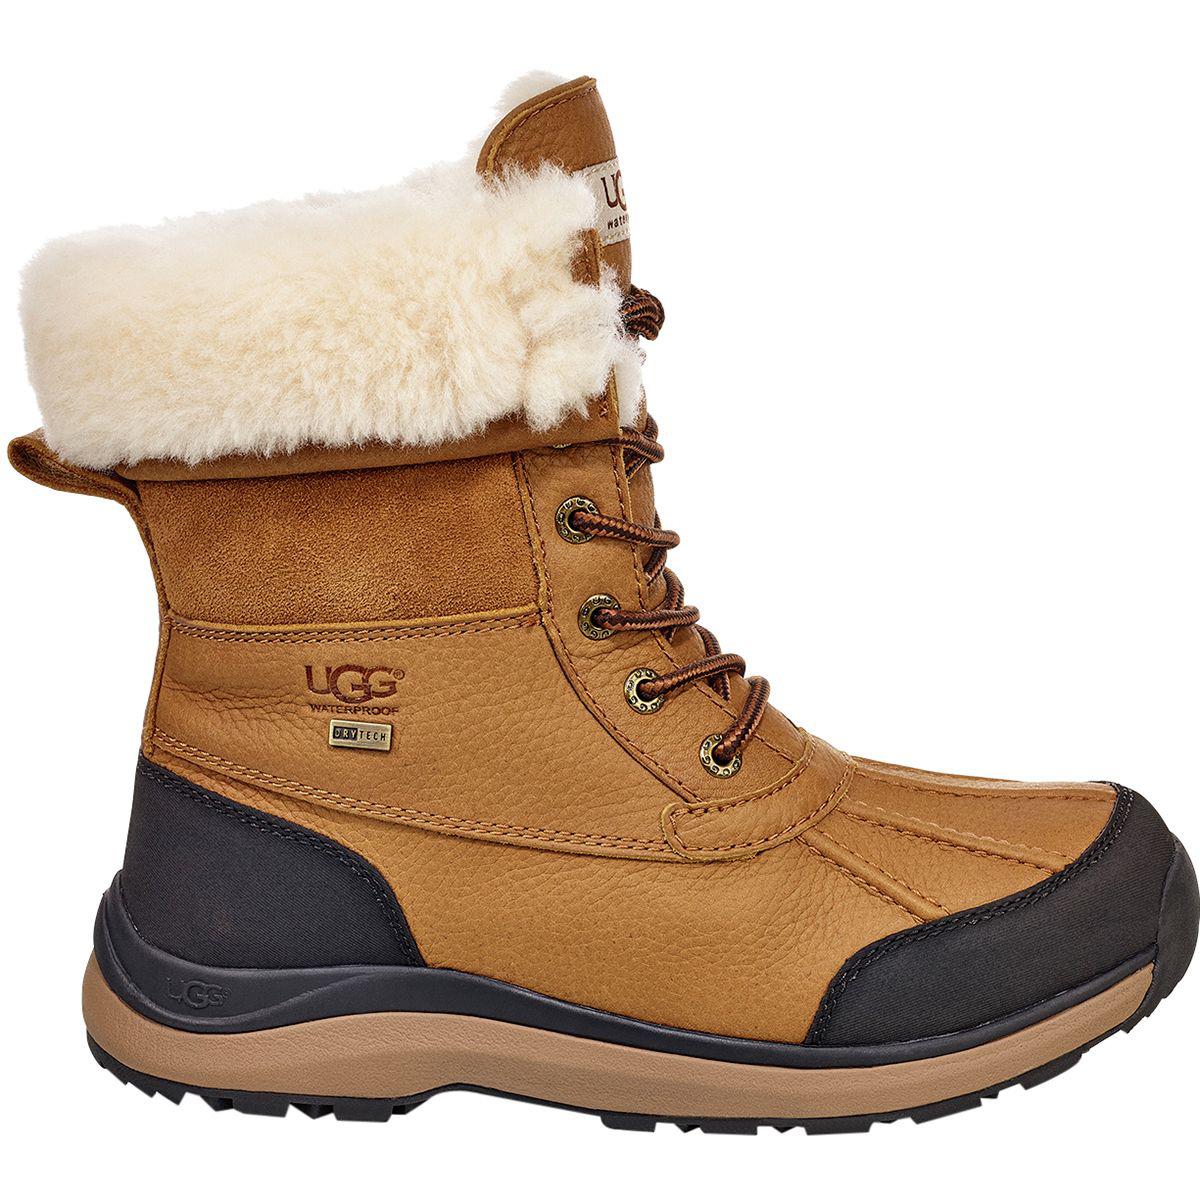 UGG Wool Adirondack Iii Boot in Chestnut (Brown) - Lyst